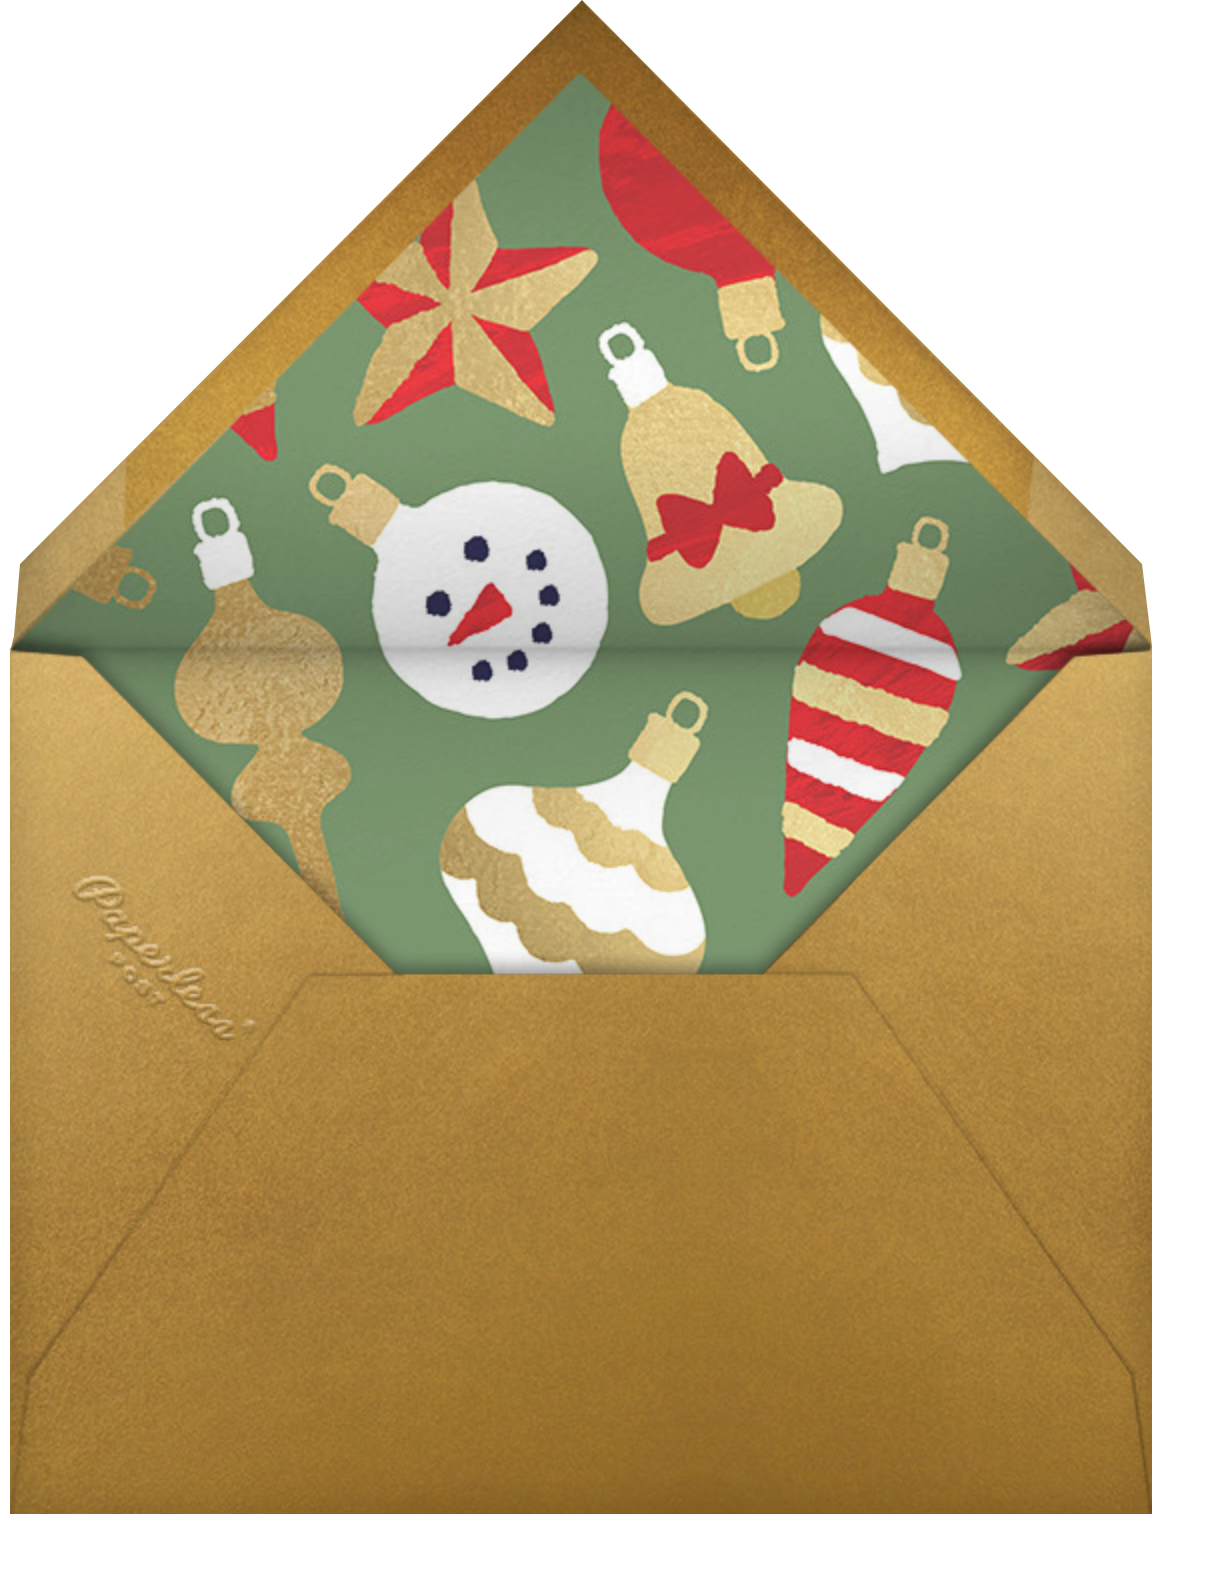 Home Screen (2 Photos) - Green - Paperless Post - Envelope